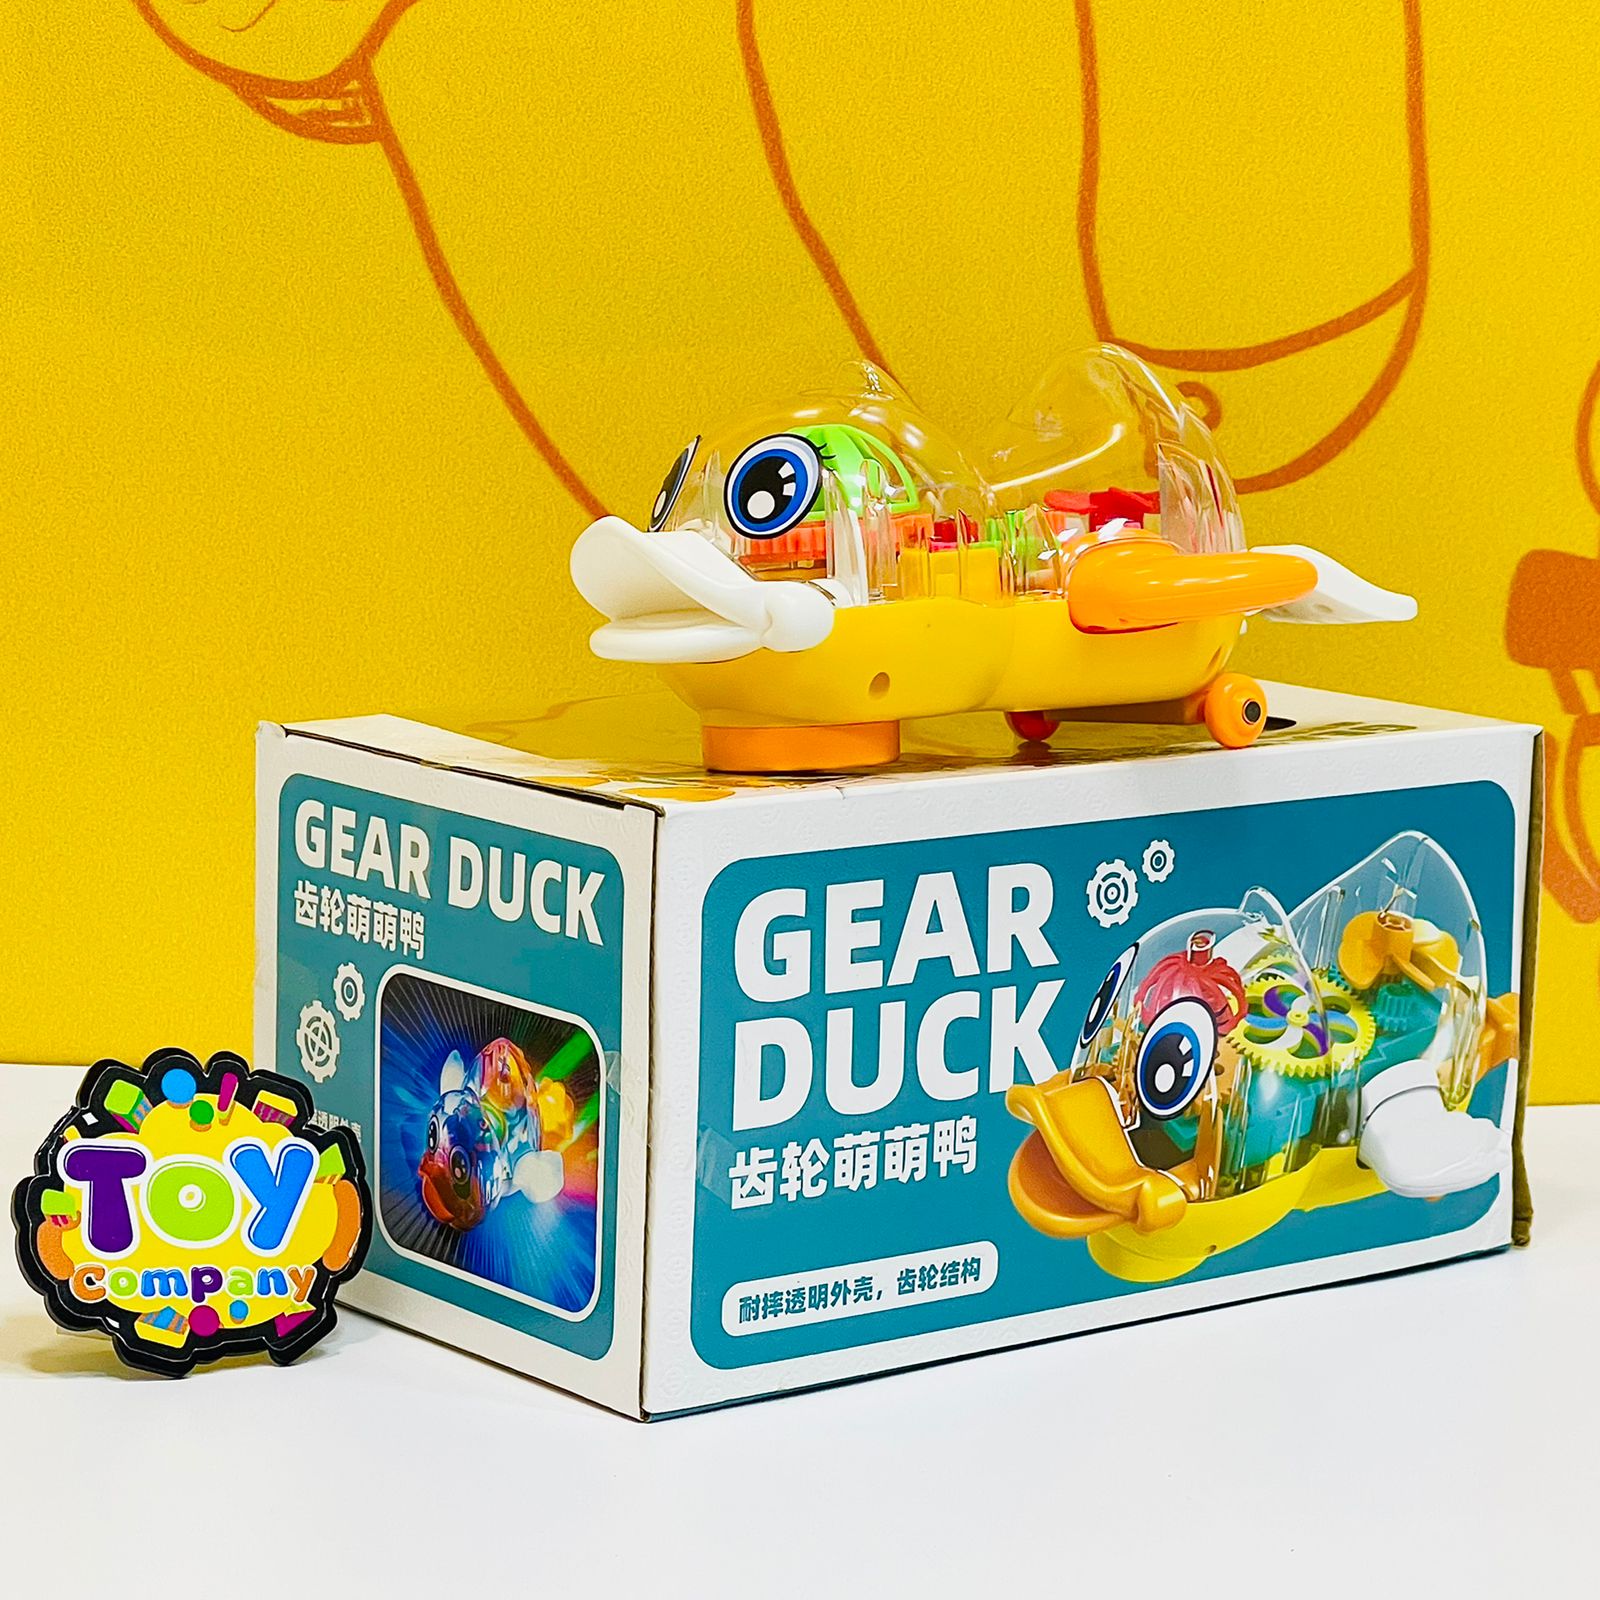 Gear duck baby toy